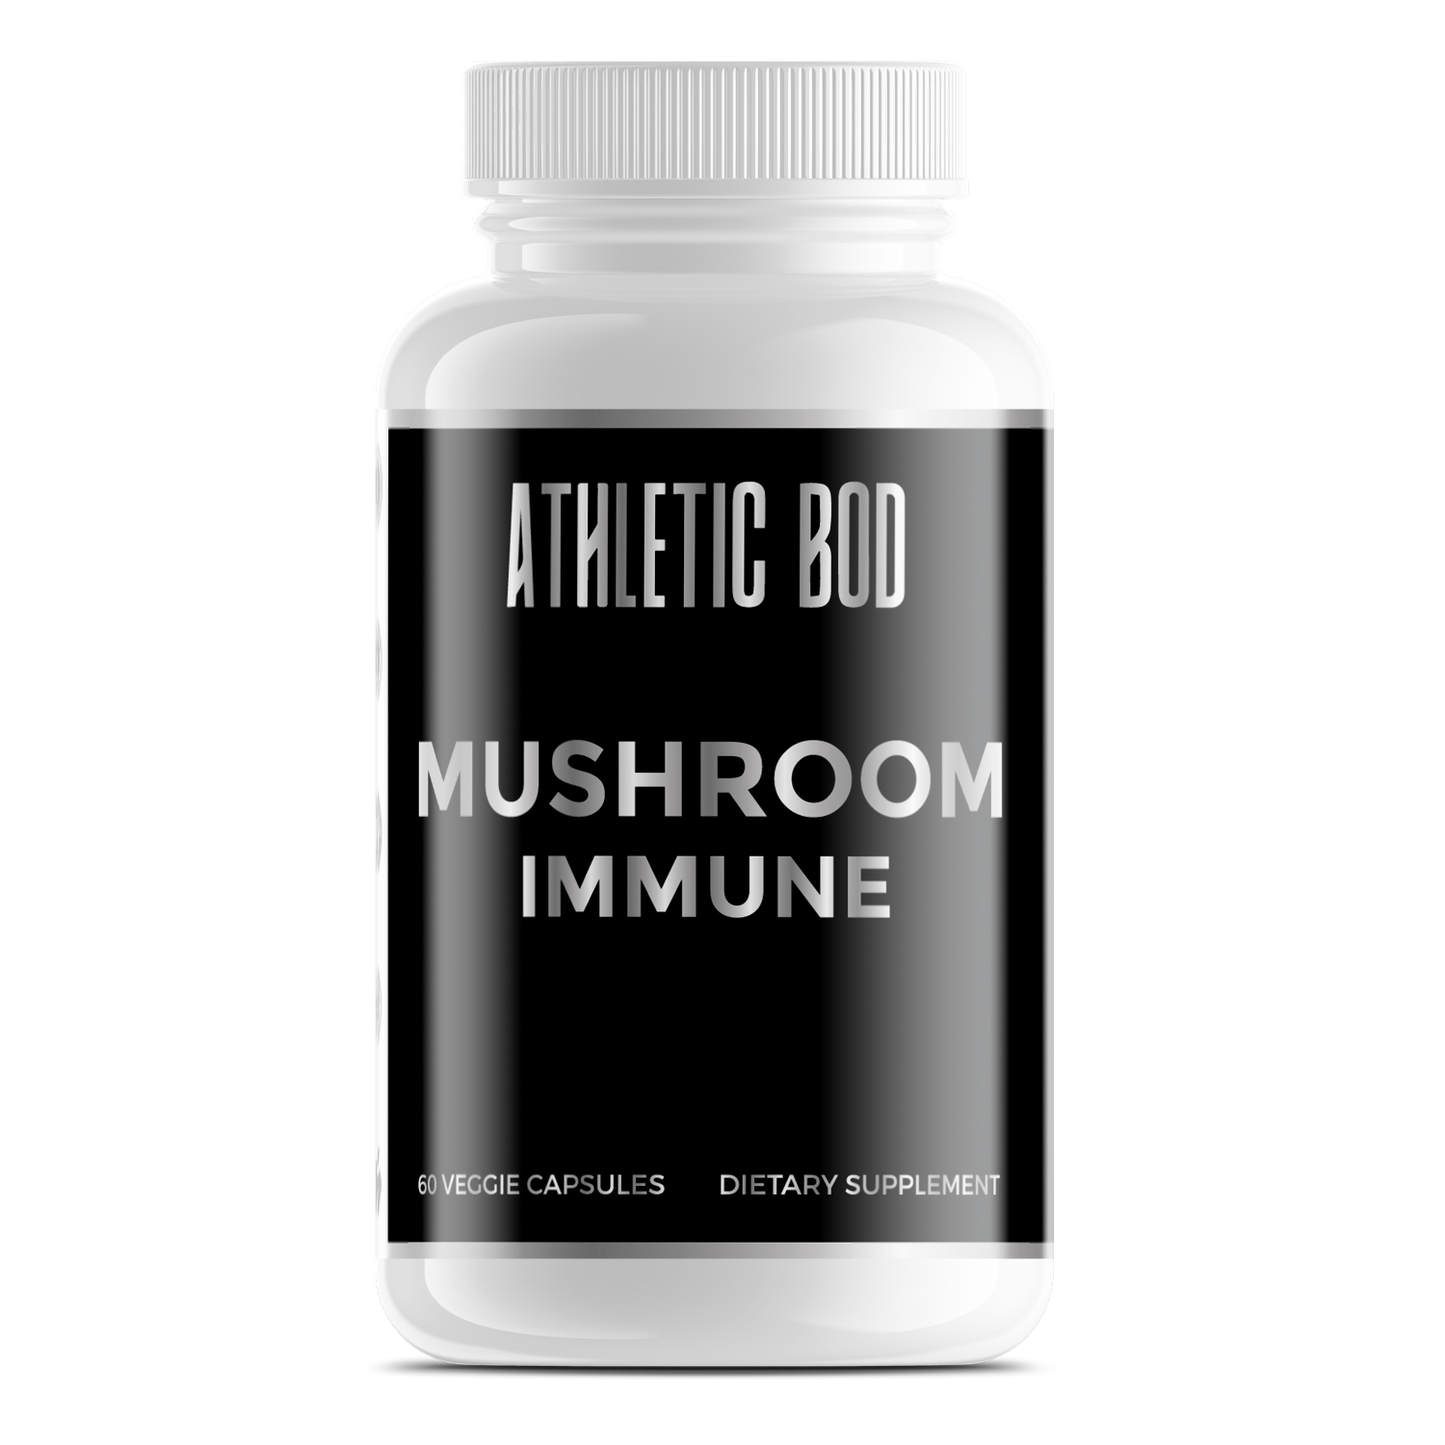 Mushroom Immune